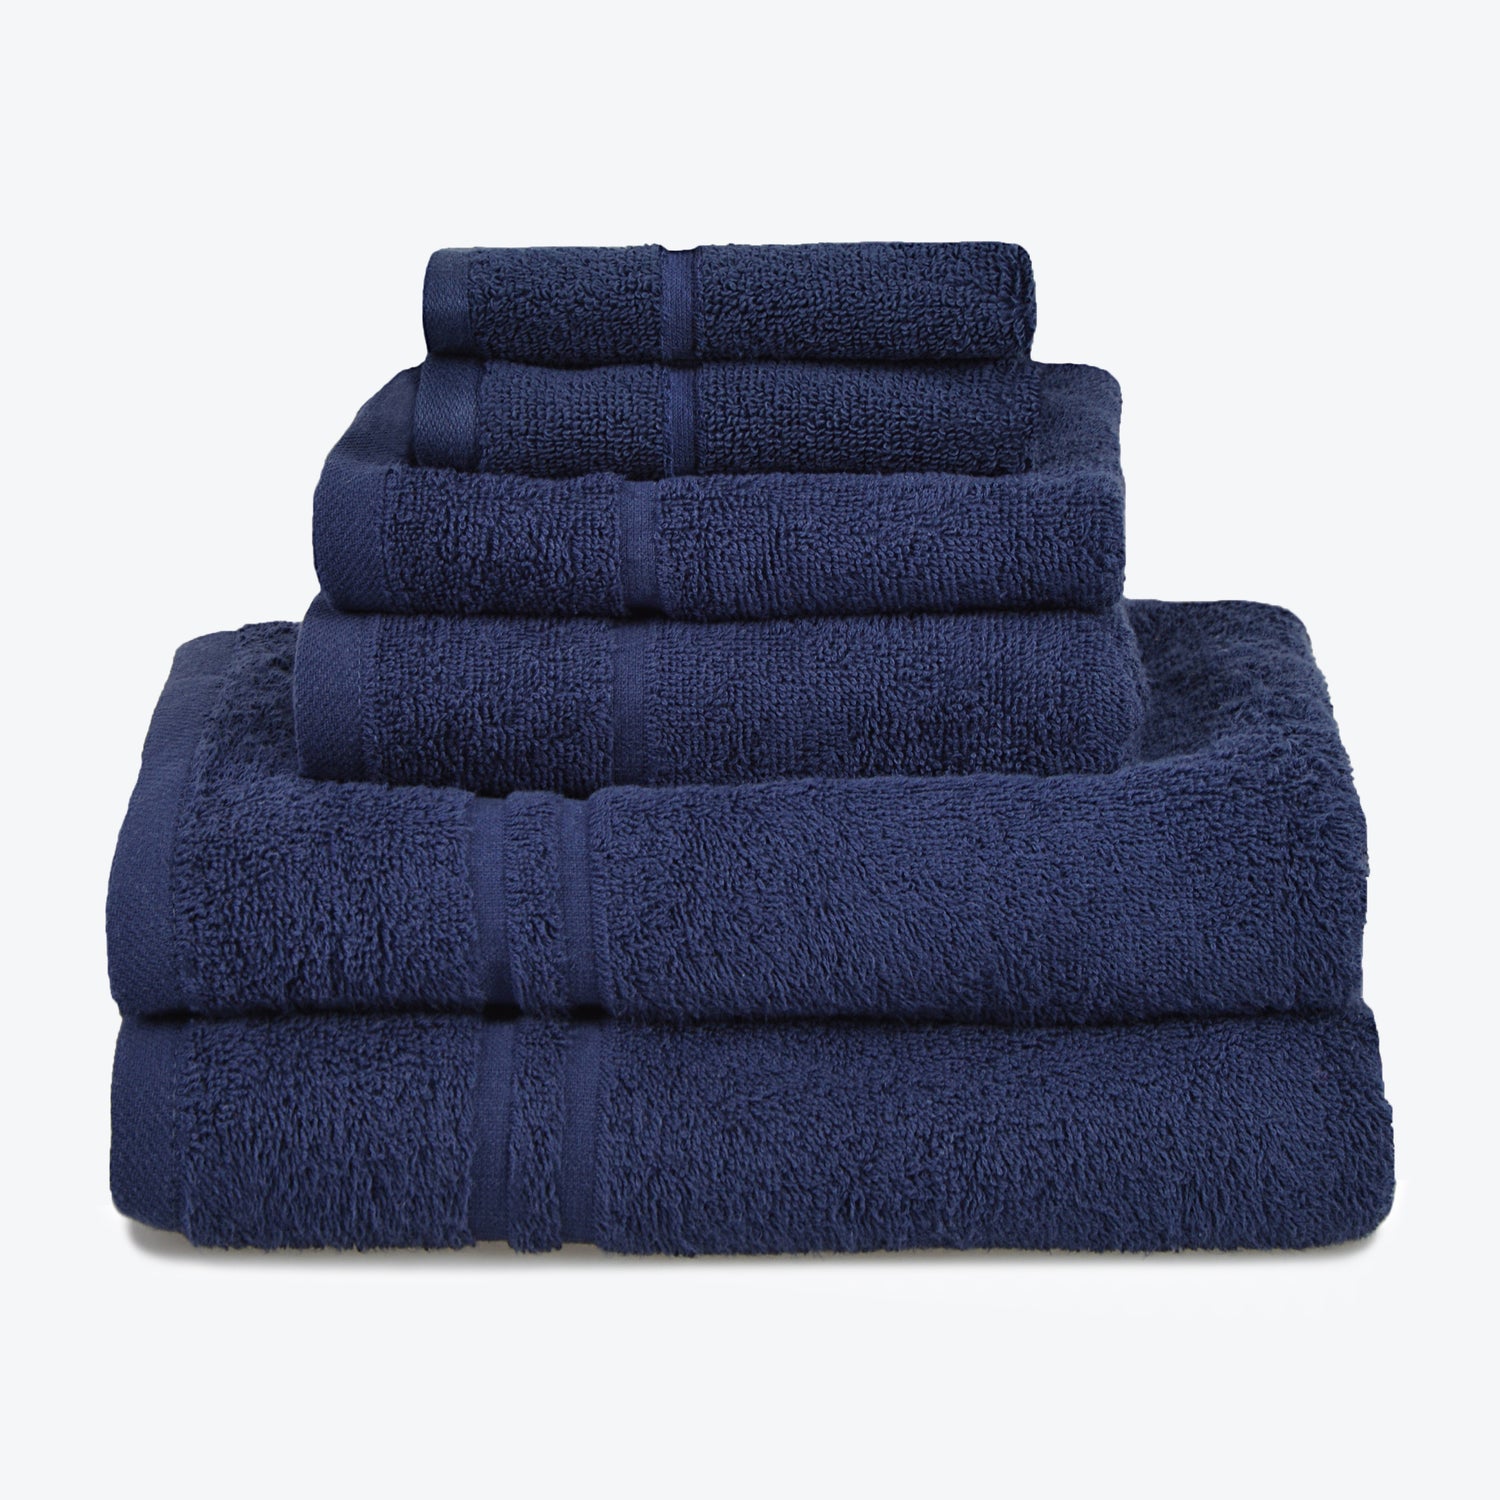 Hotel Quality Towel Bale - Navy Blue 6pc Towel Set